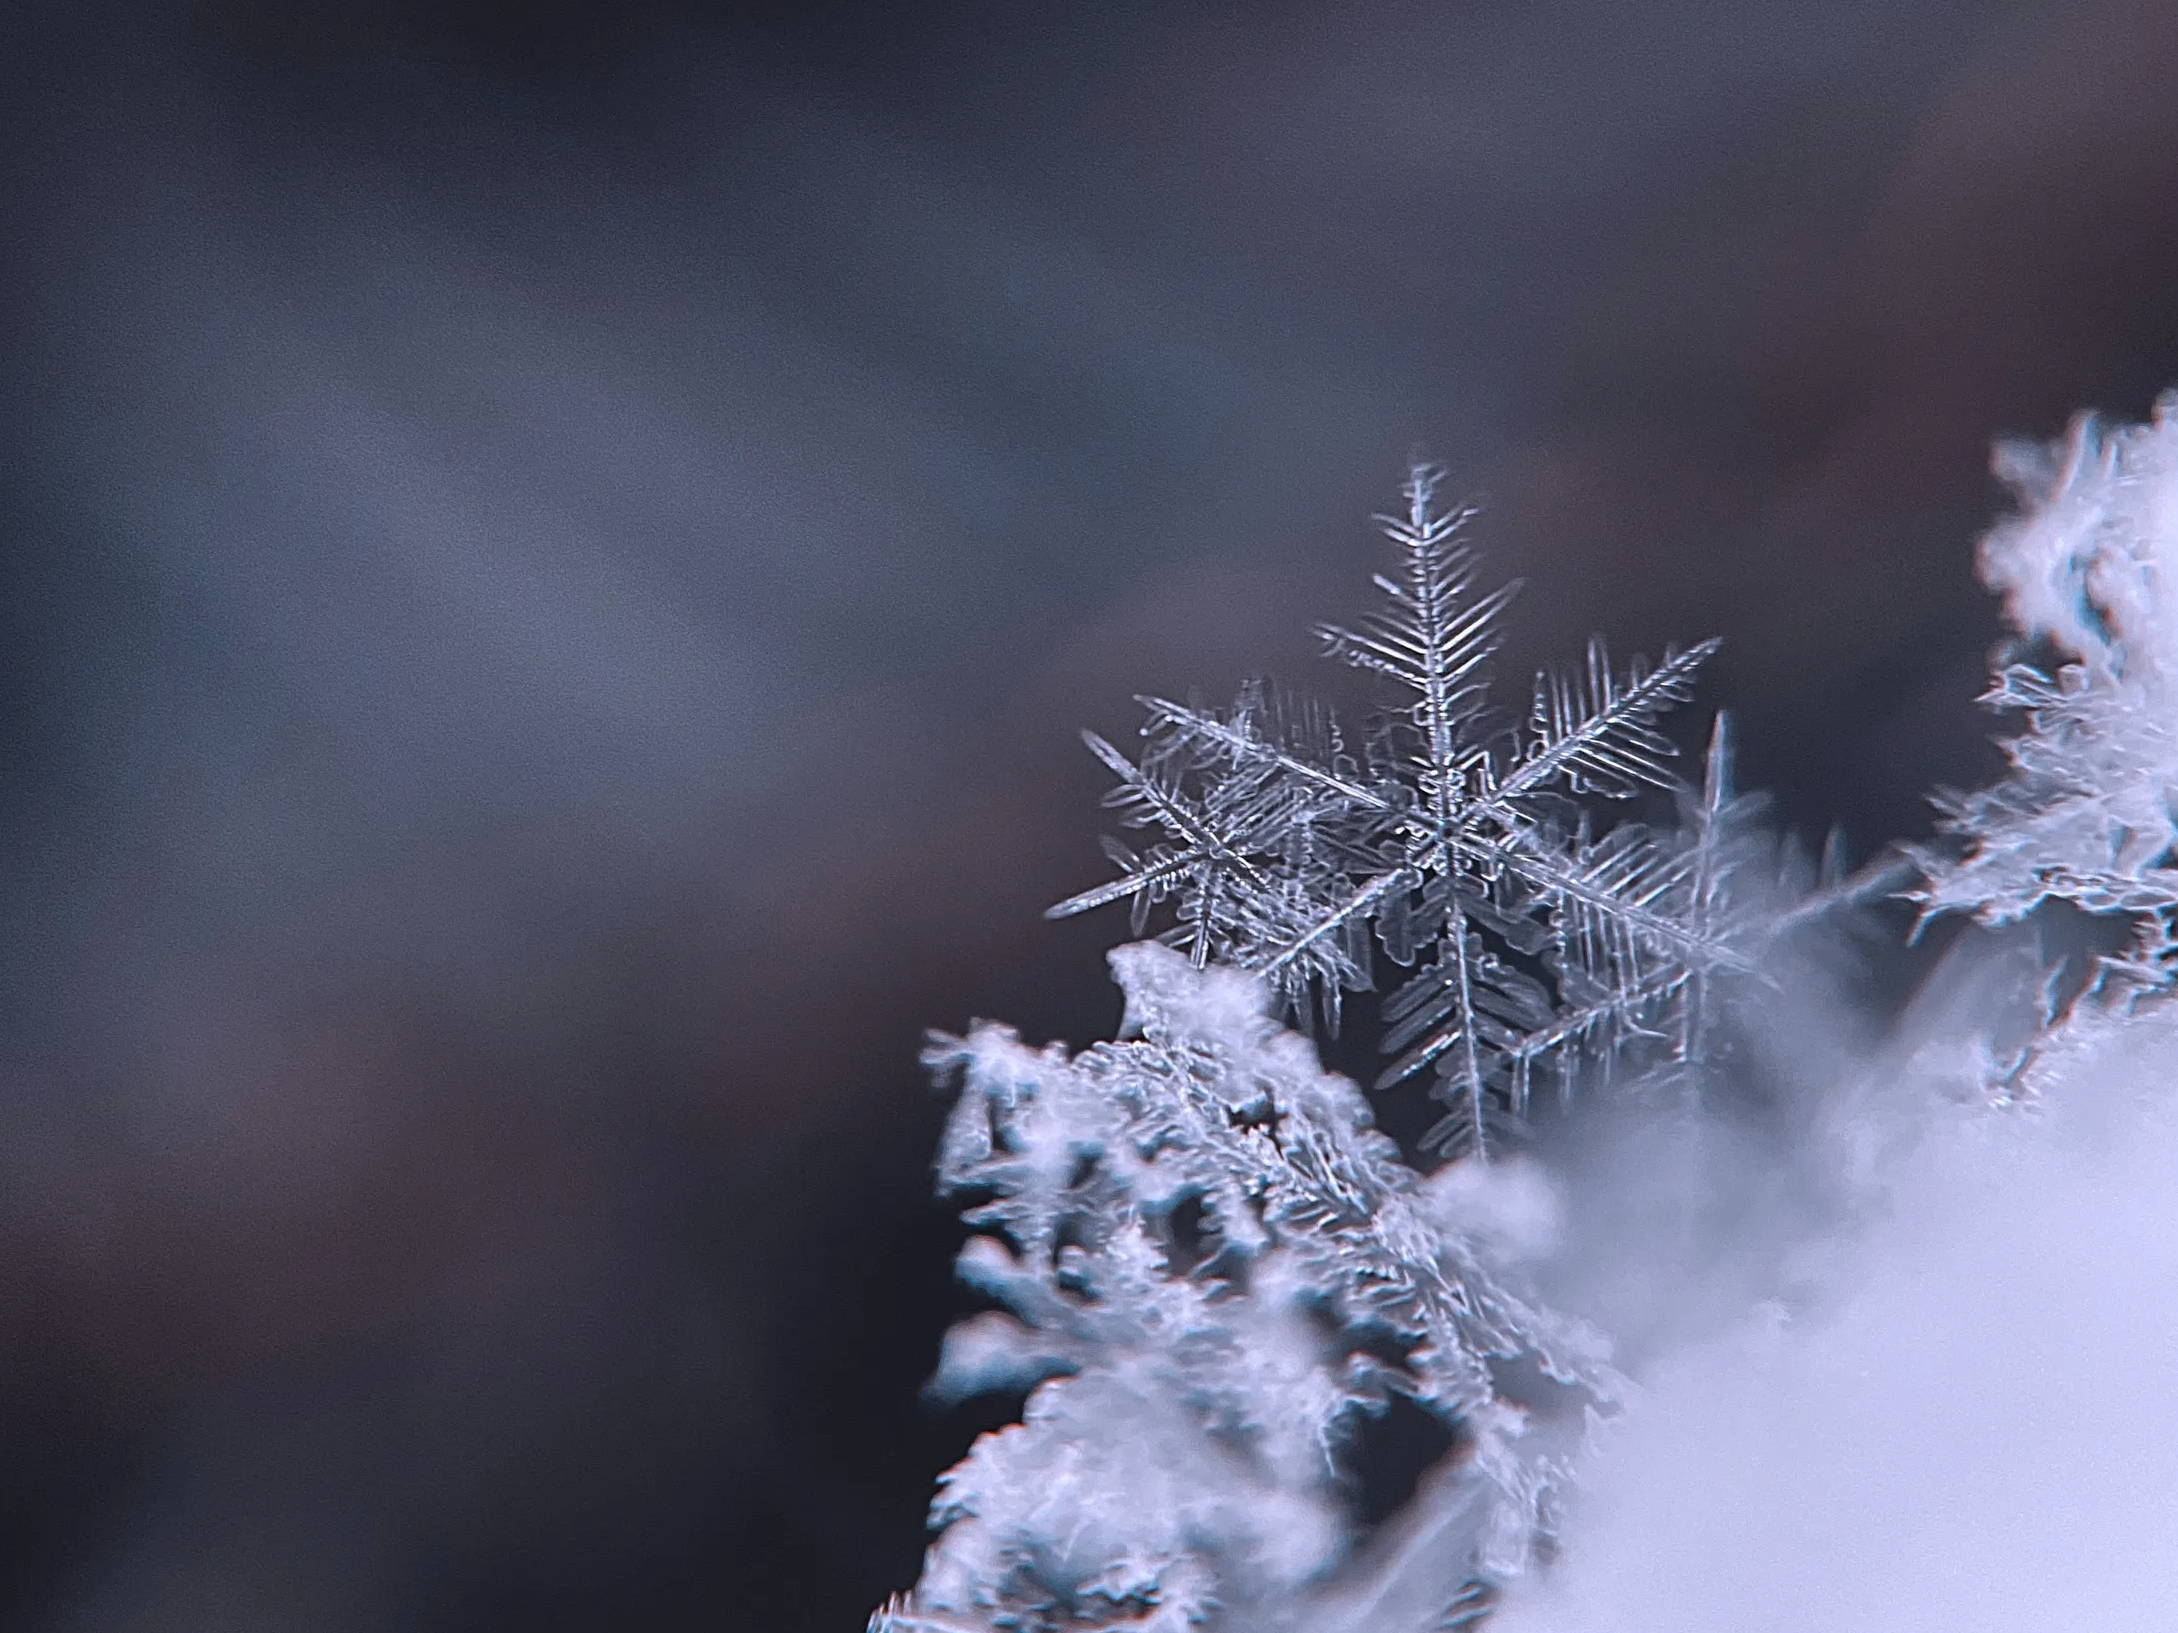 Closeup of a snowflake